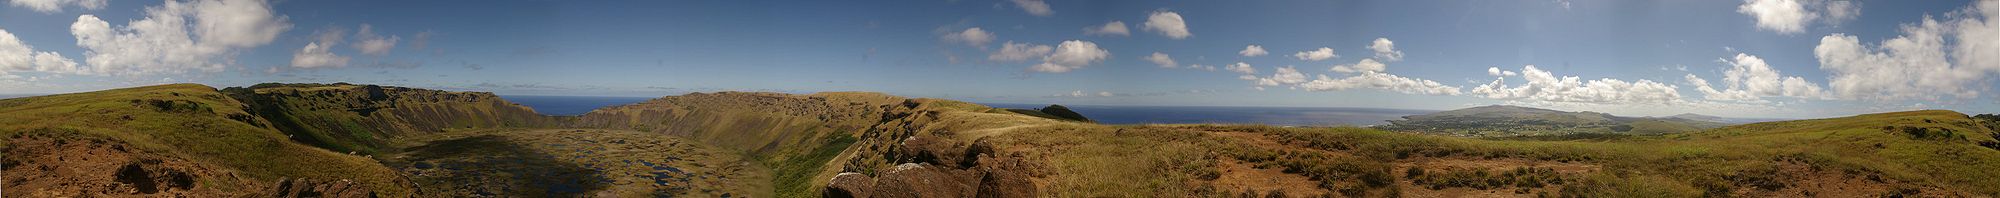 Панорама острова Пасхи